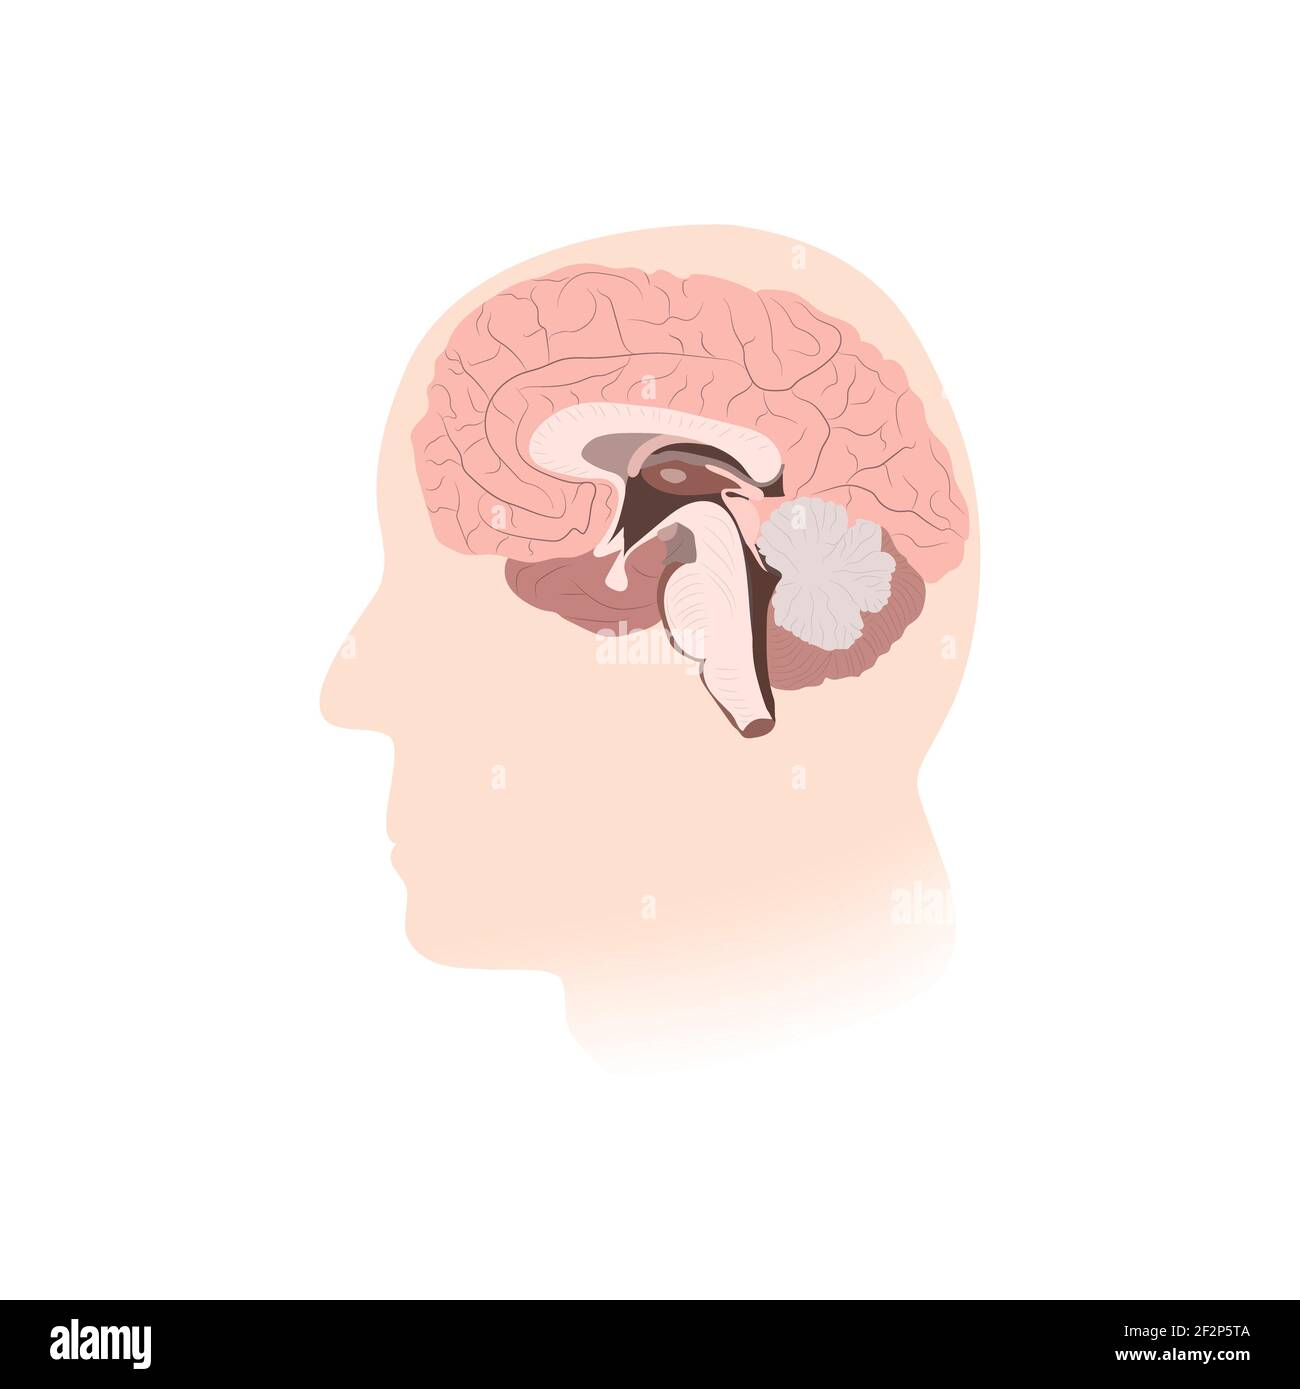 Innere Ansicht des Gehirns, Illustration Stockfoto